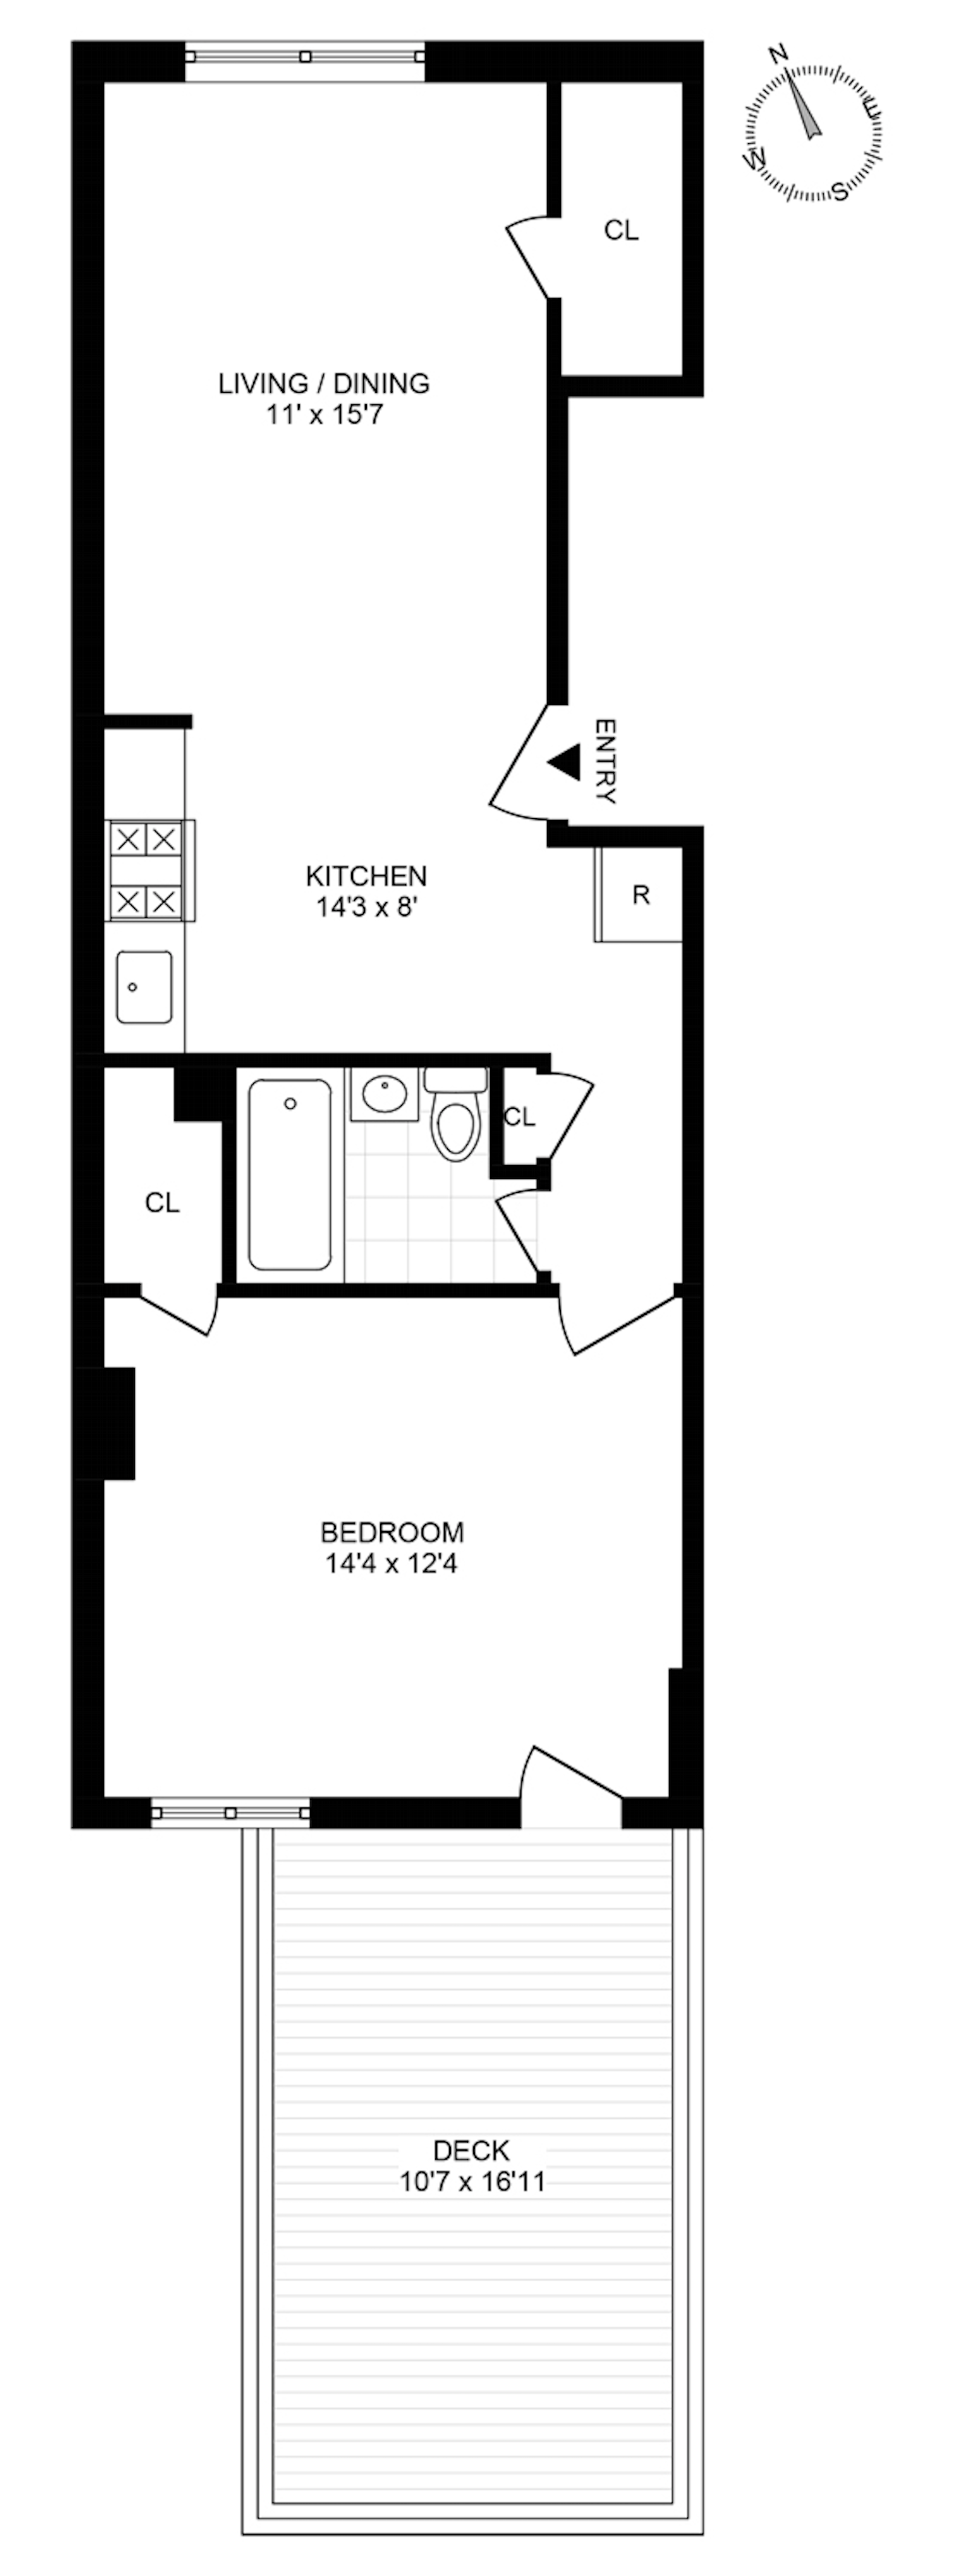 Floorplan for 406 9th St, 2